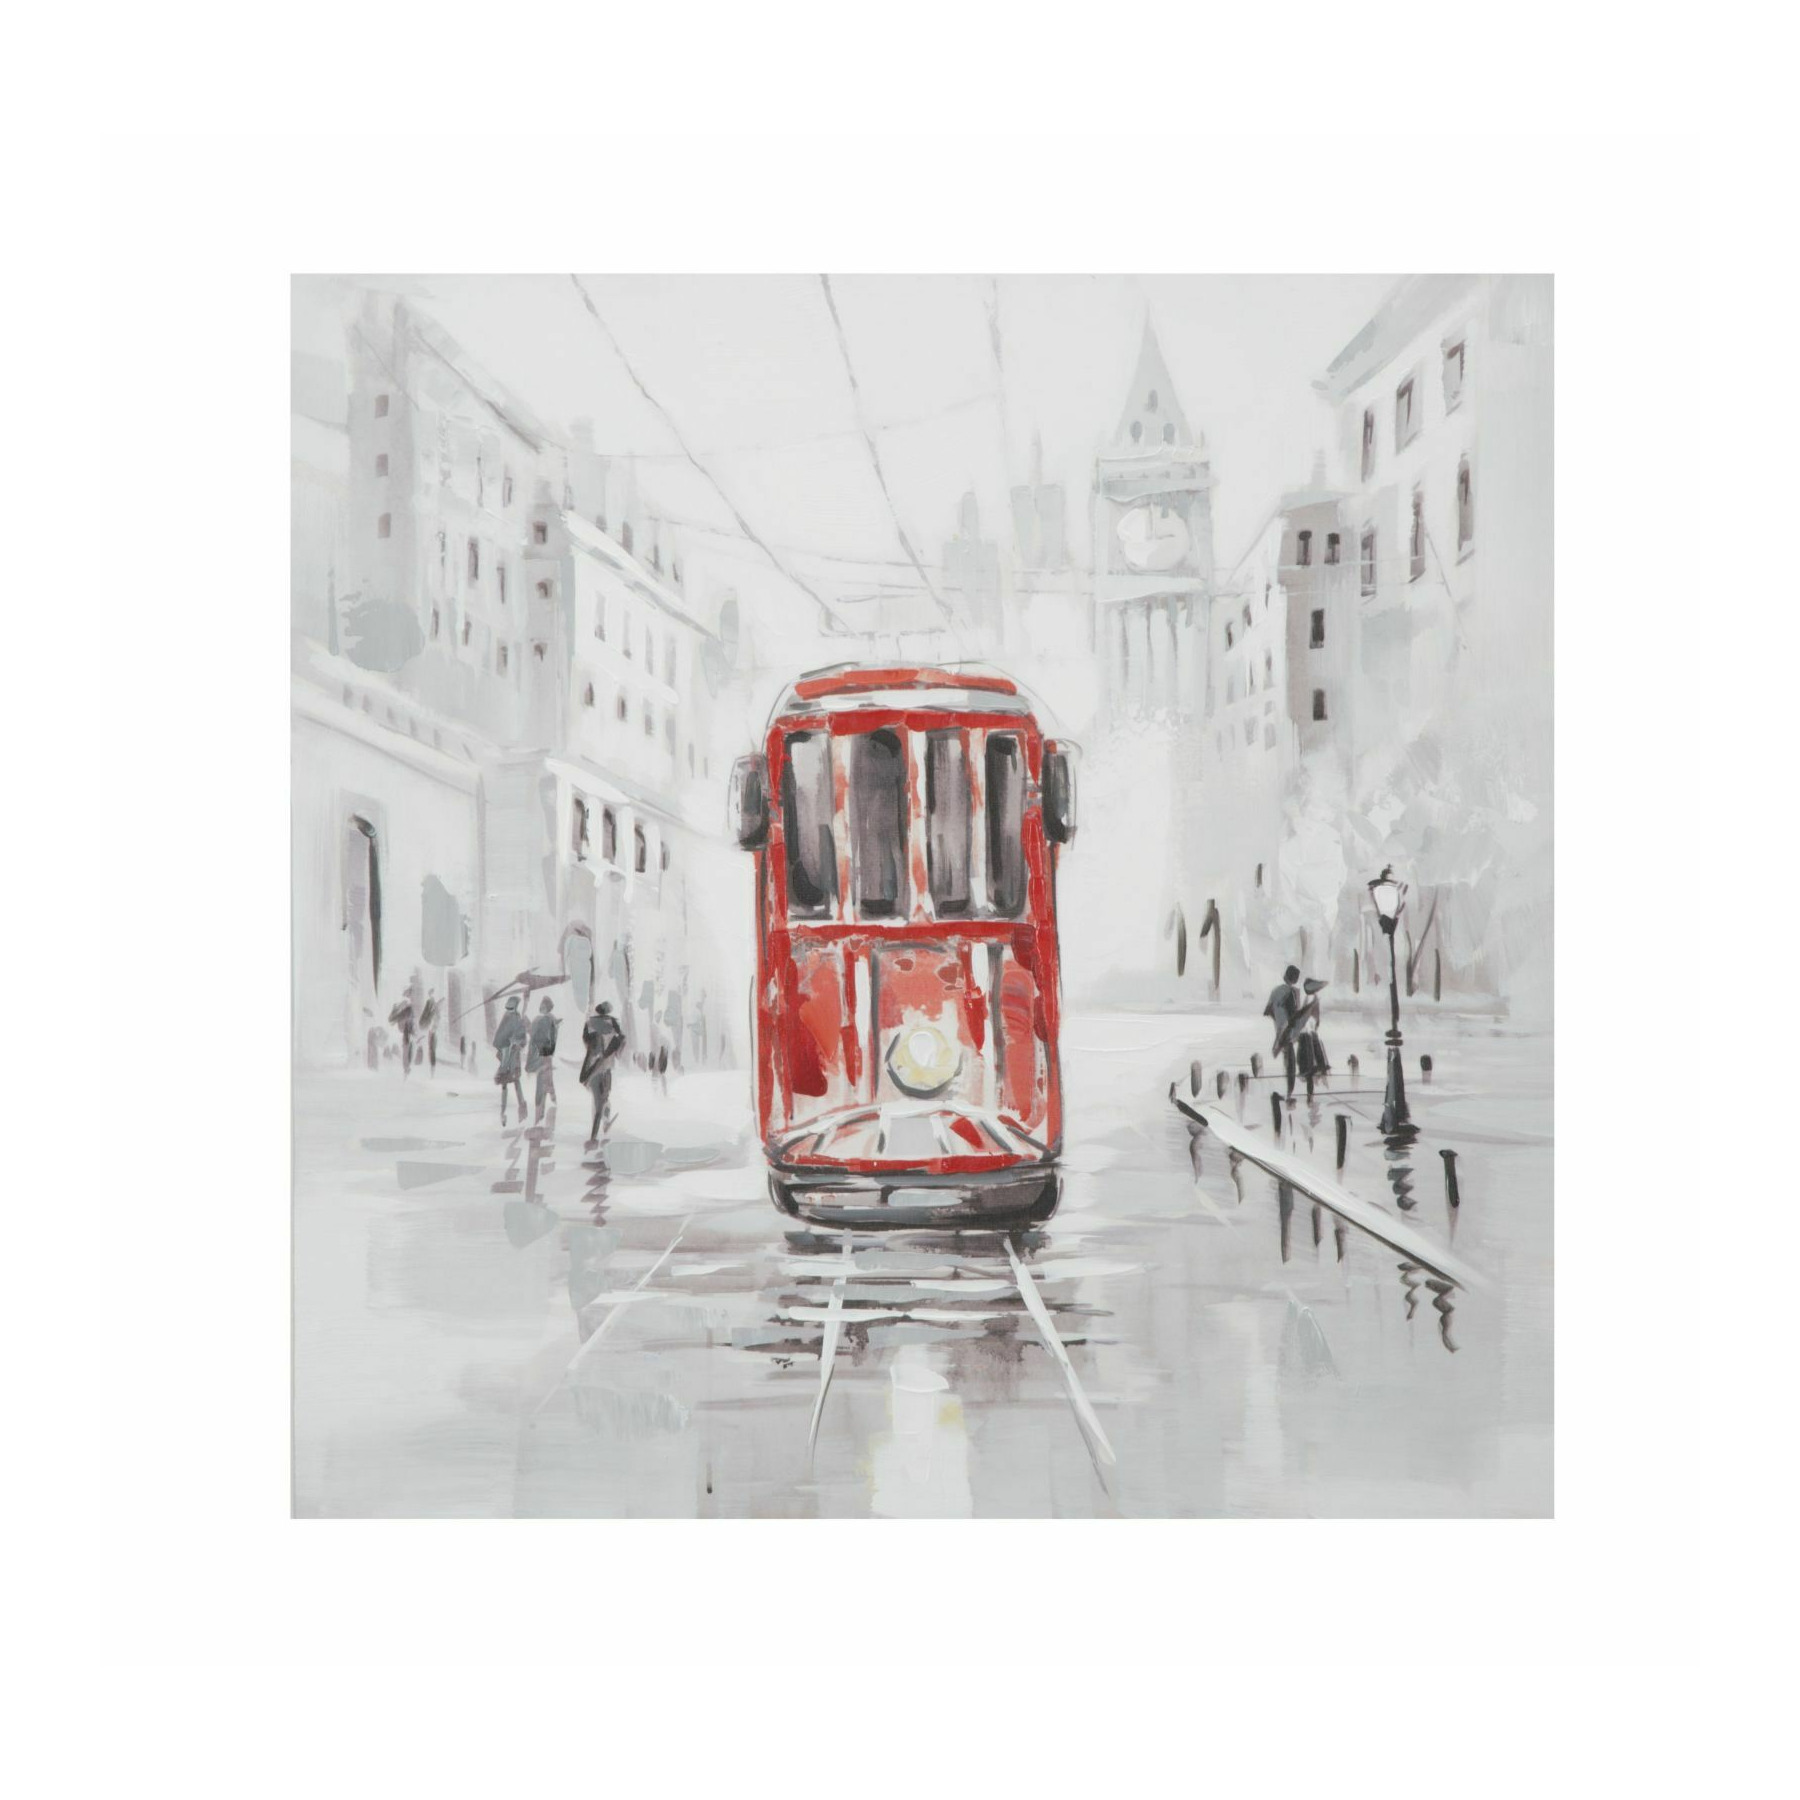 Tablou cu tren, Roma1120, Multicolor, Lemn de brad si Canvas, 80x80x3 cm